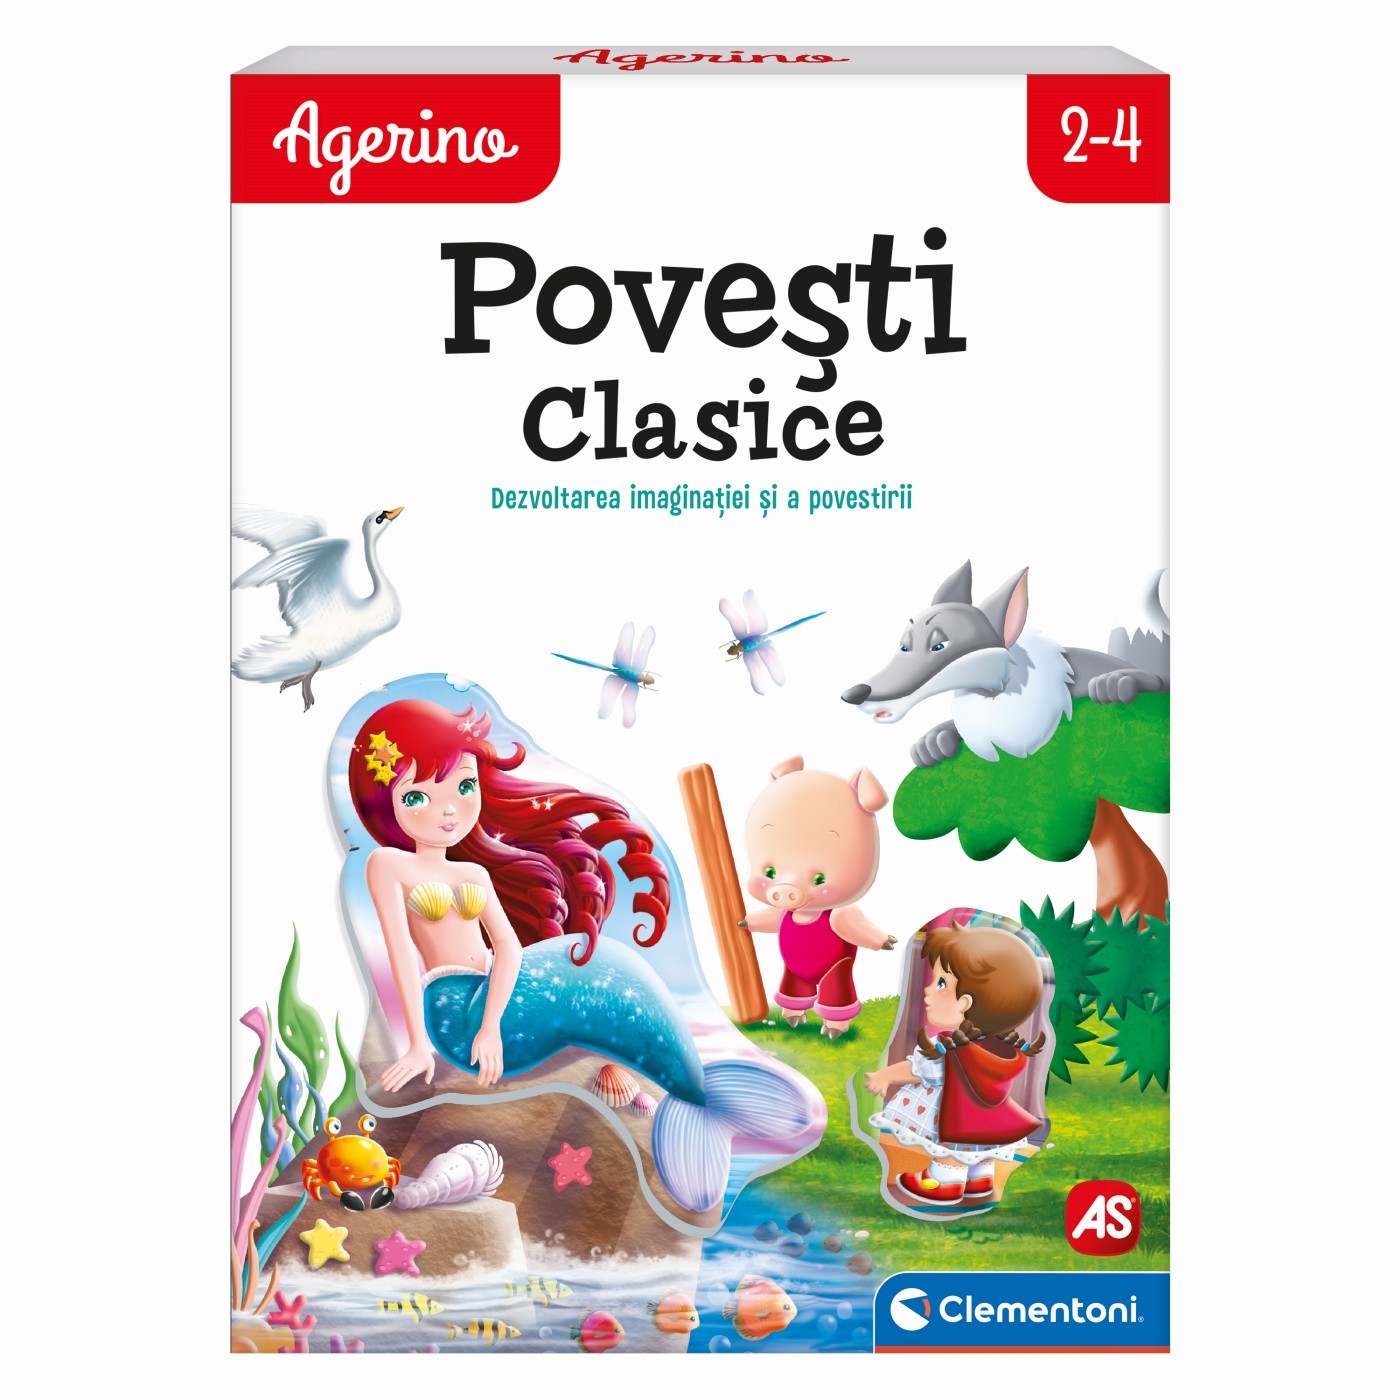 Joc educativ Povesti clasice Agerino, 2 ani+, Clementoni